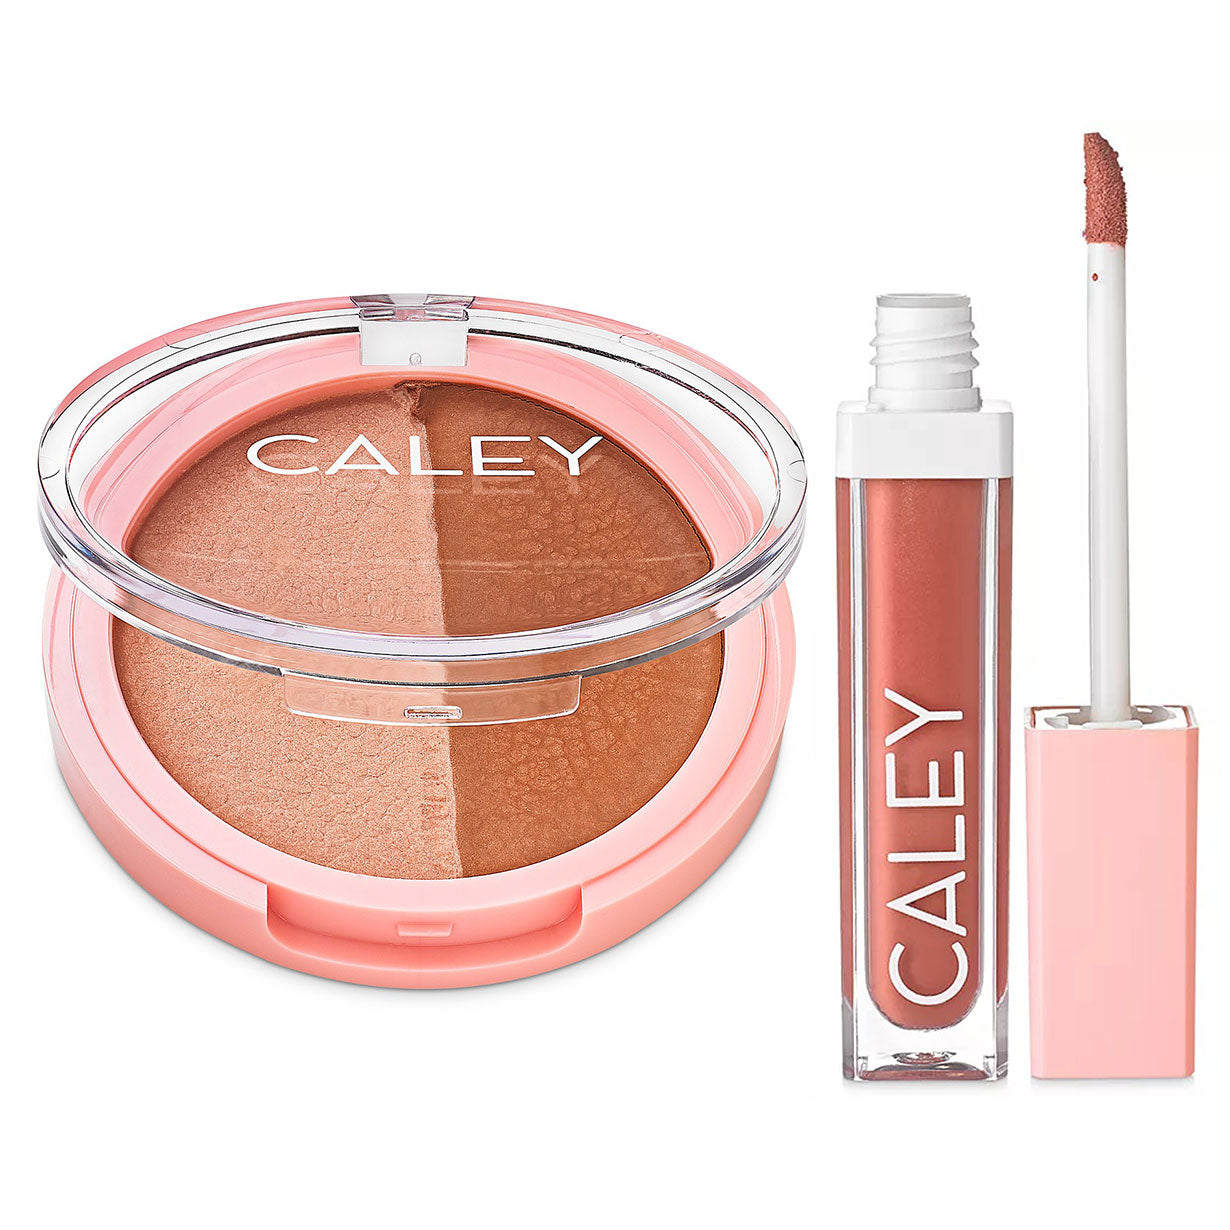 Glow Getter Bundle Face Makeup Caley Peach Glow Guava 